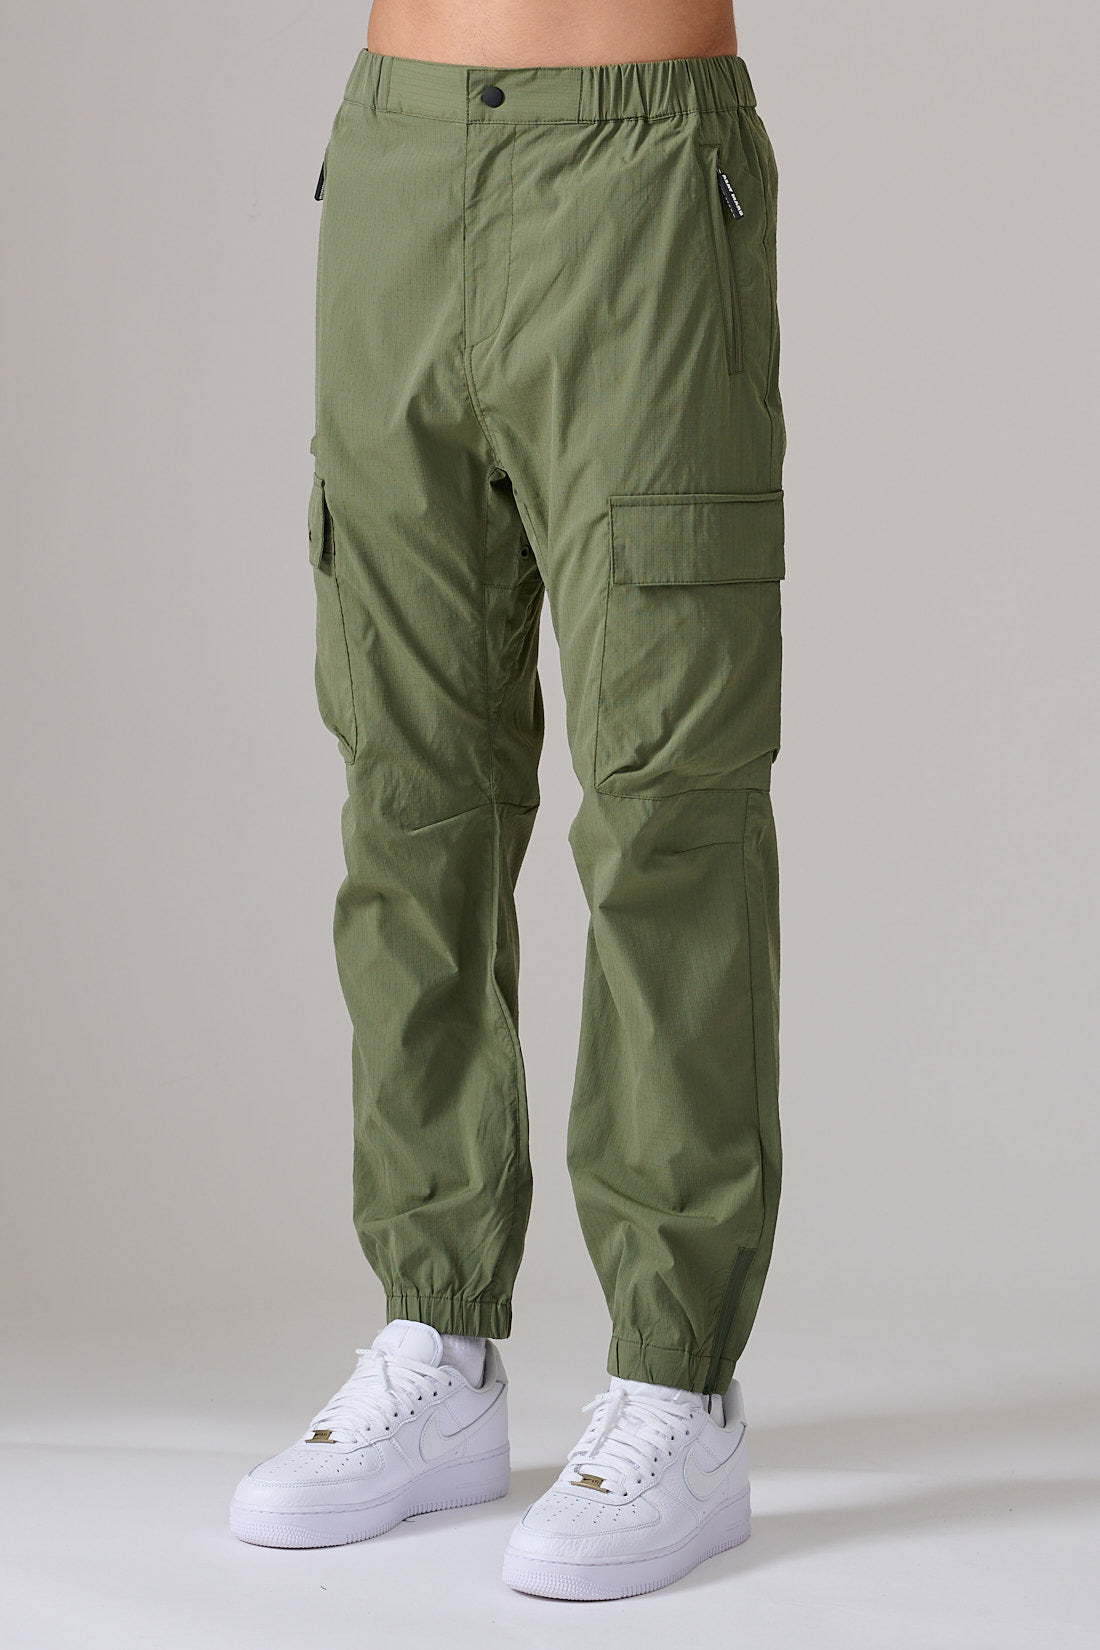 Mak Workwear Ripstop Work Pants M2011 – Visual Workwear